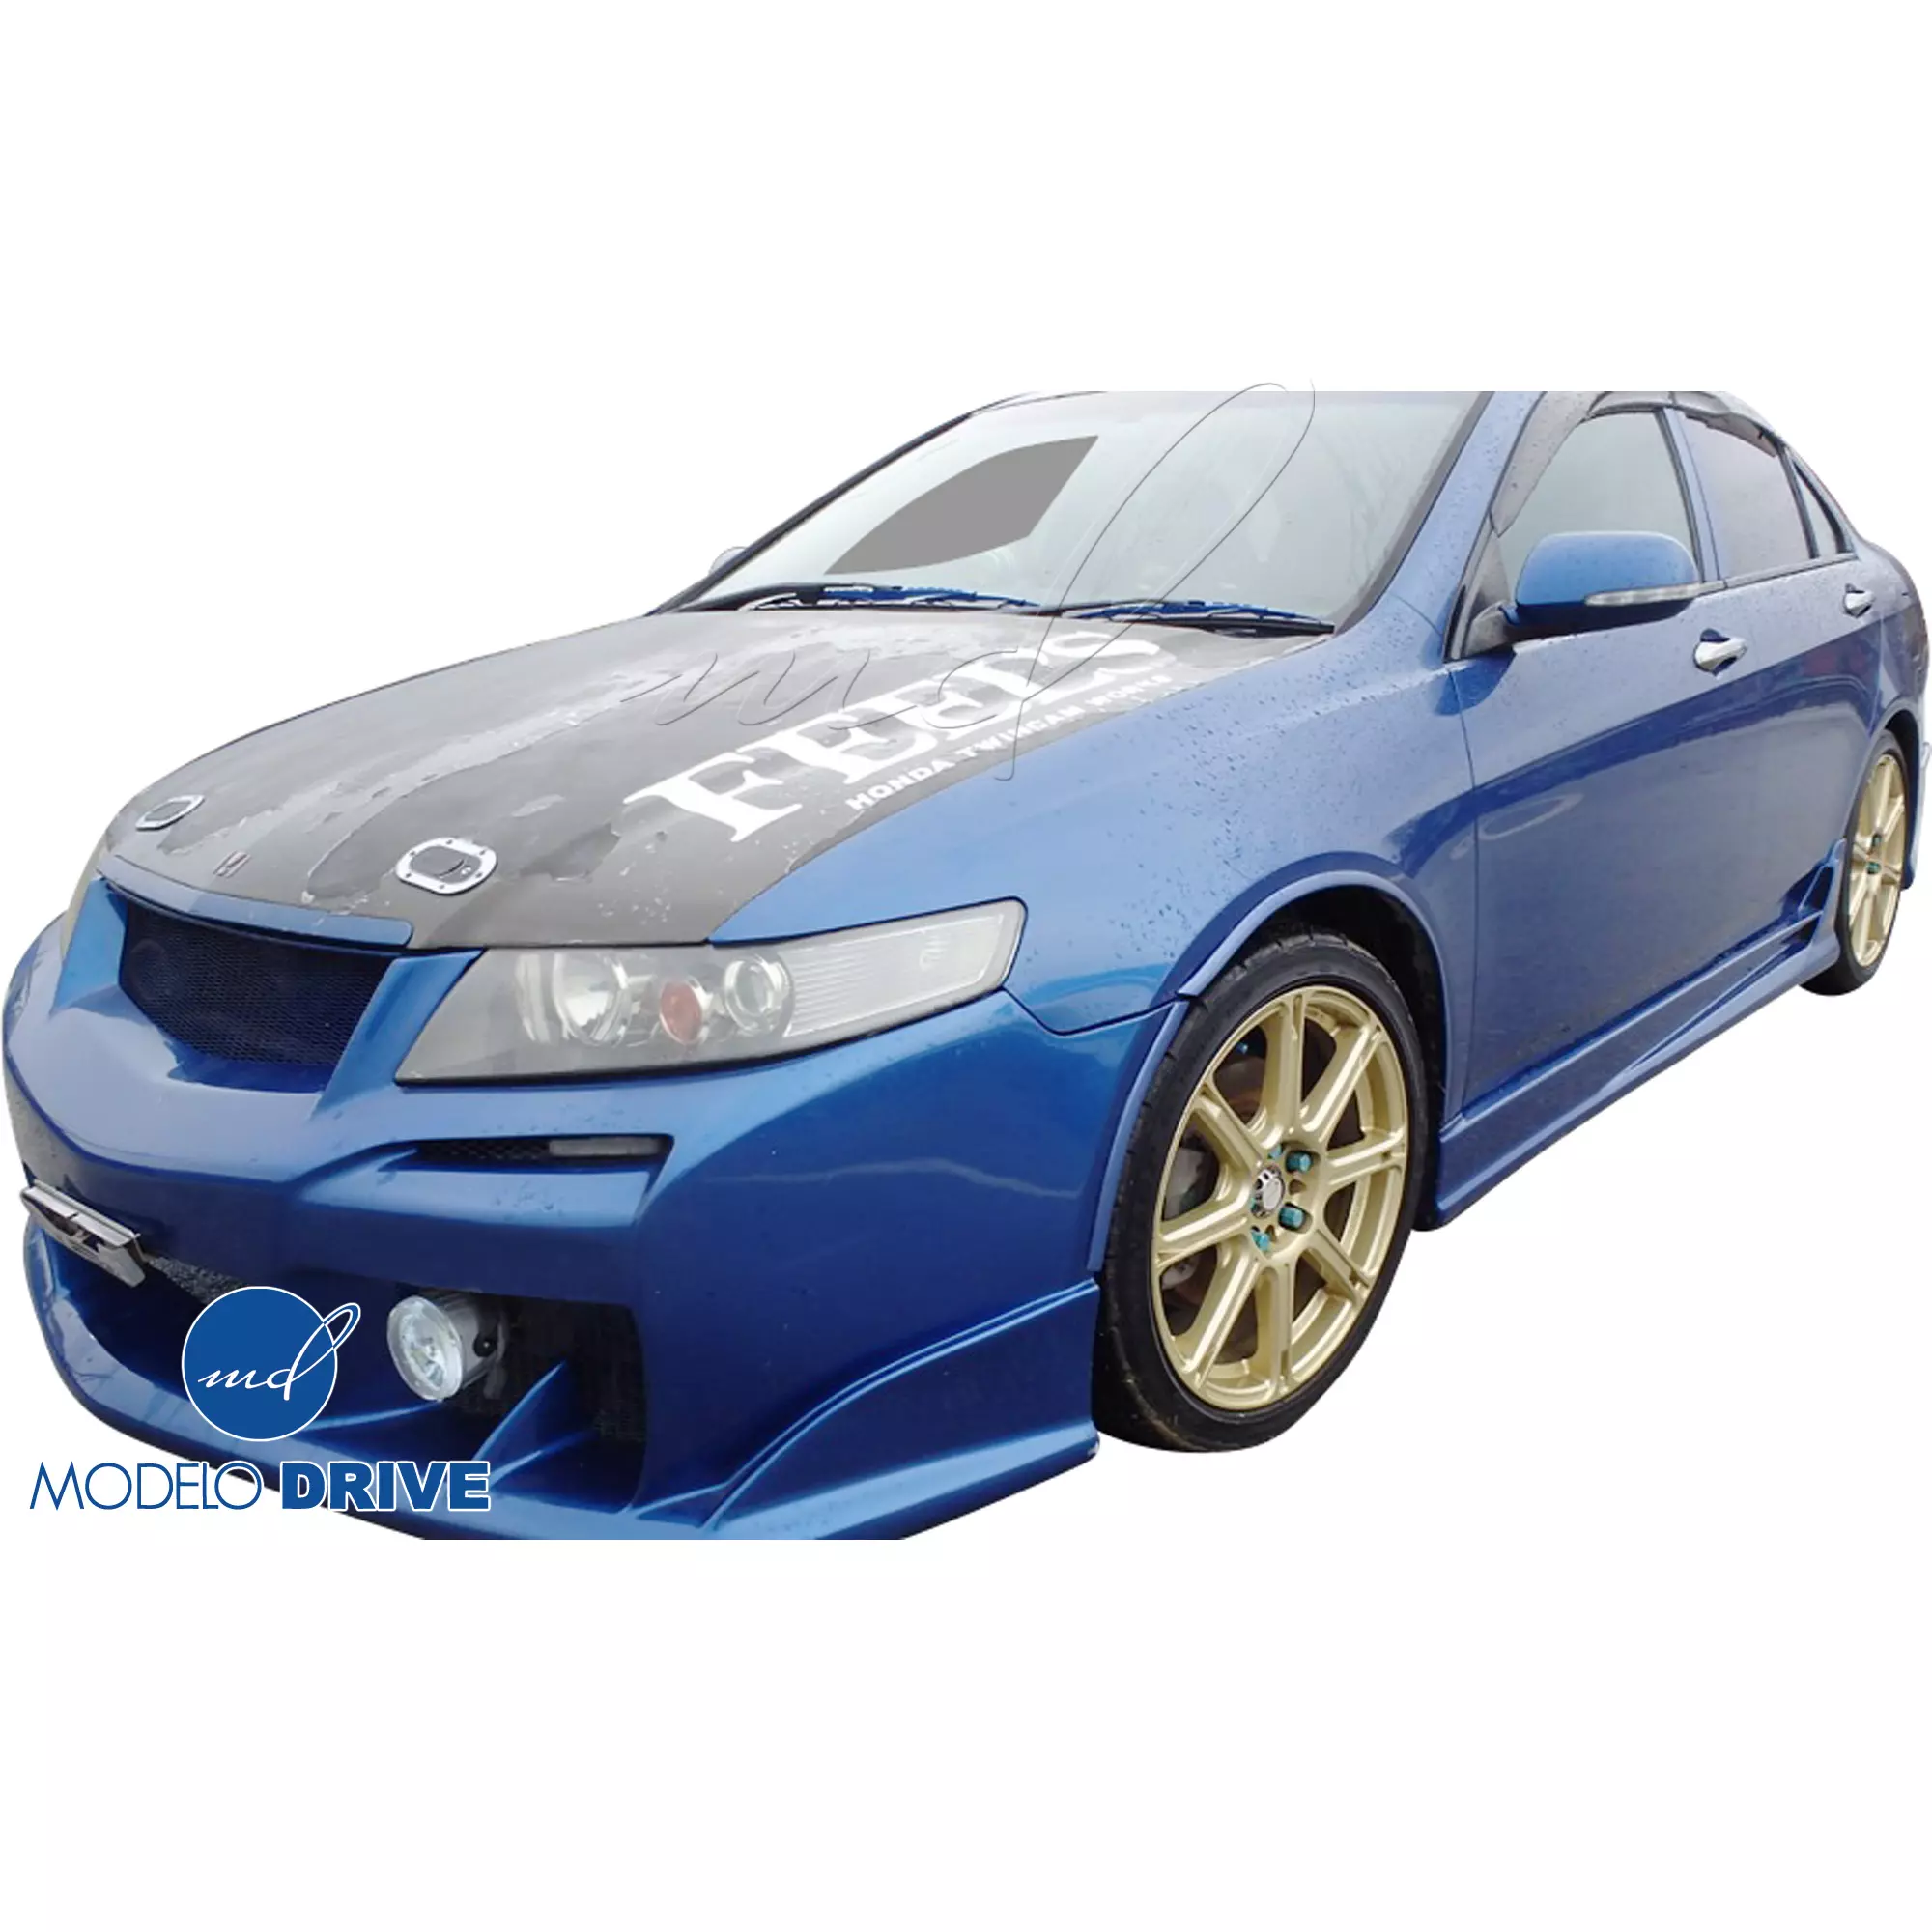 ModeloDrive FRP LSTA Body Kit 4pc > Acura TSX CL9 2004-2008 - Image 12